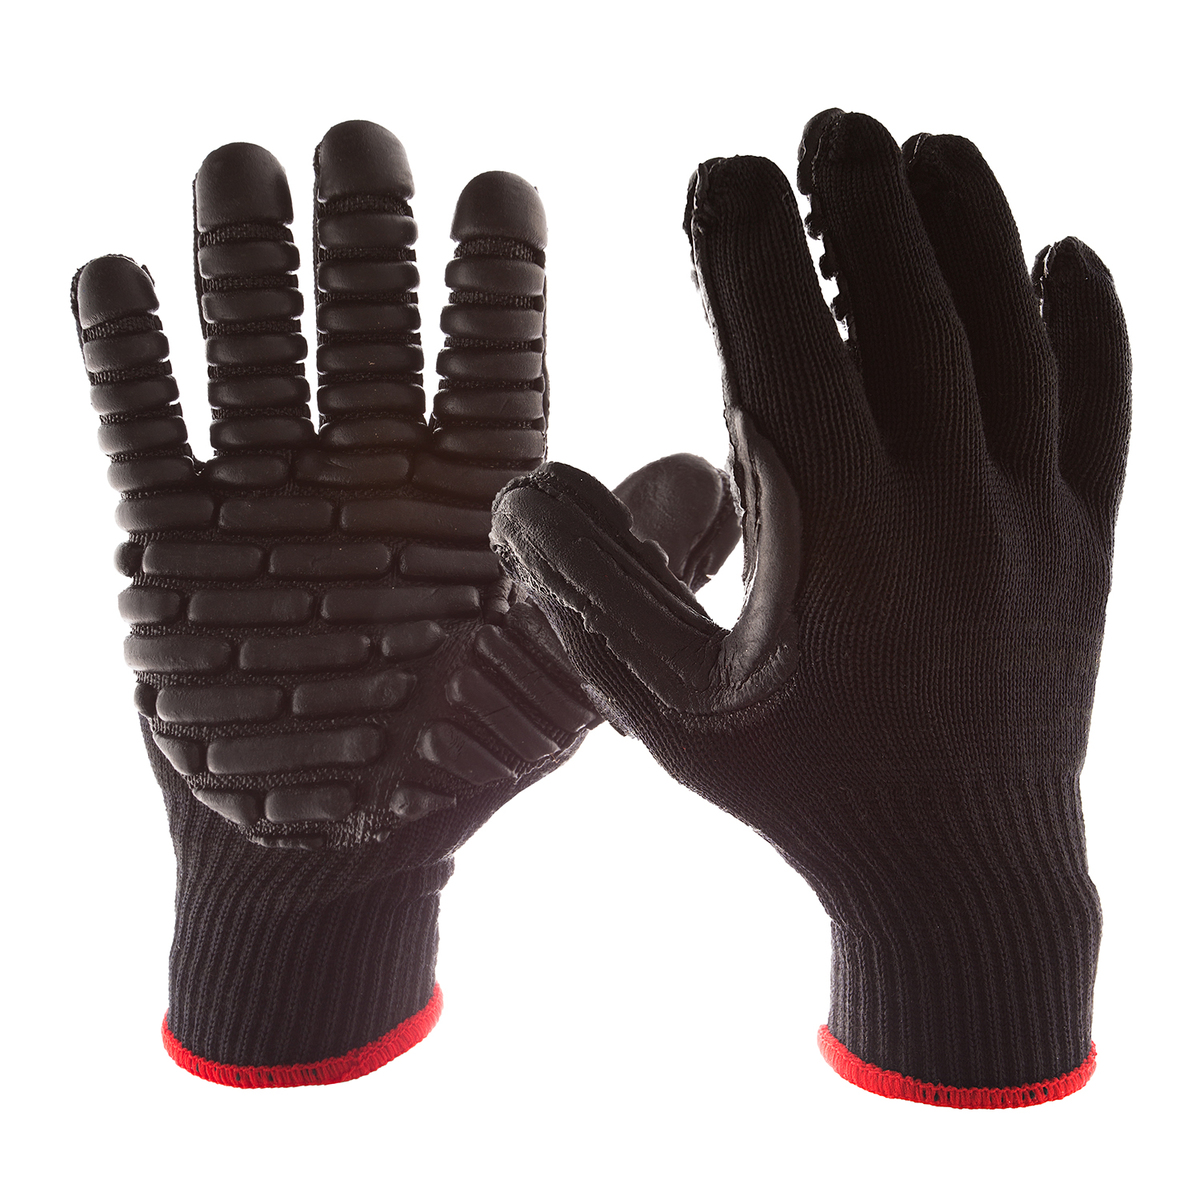 Impacto Protective Products X-Large Black BlackMaxx Pro Cellular Chloroprene And Nylon Full Finger Anti-Vibration Mechanics Glov